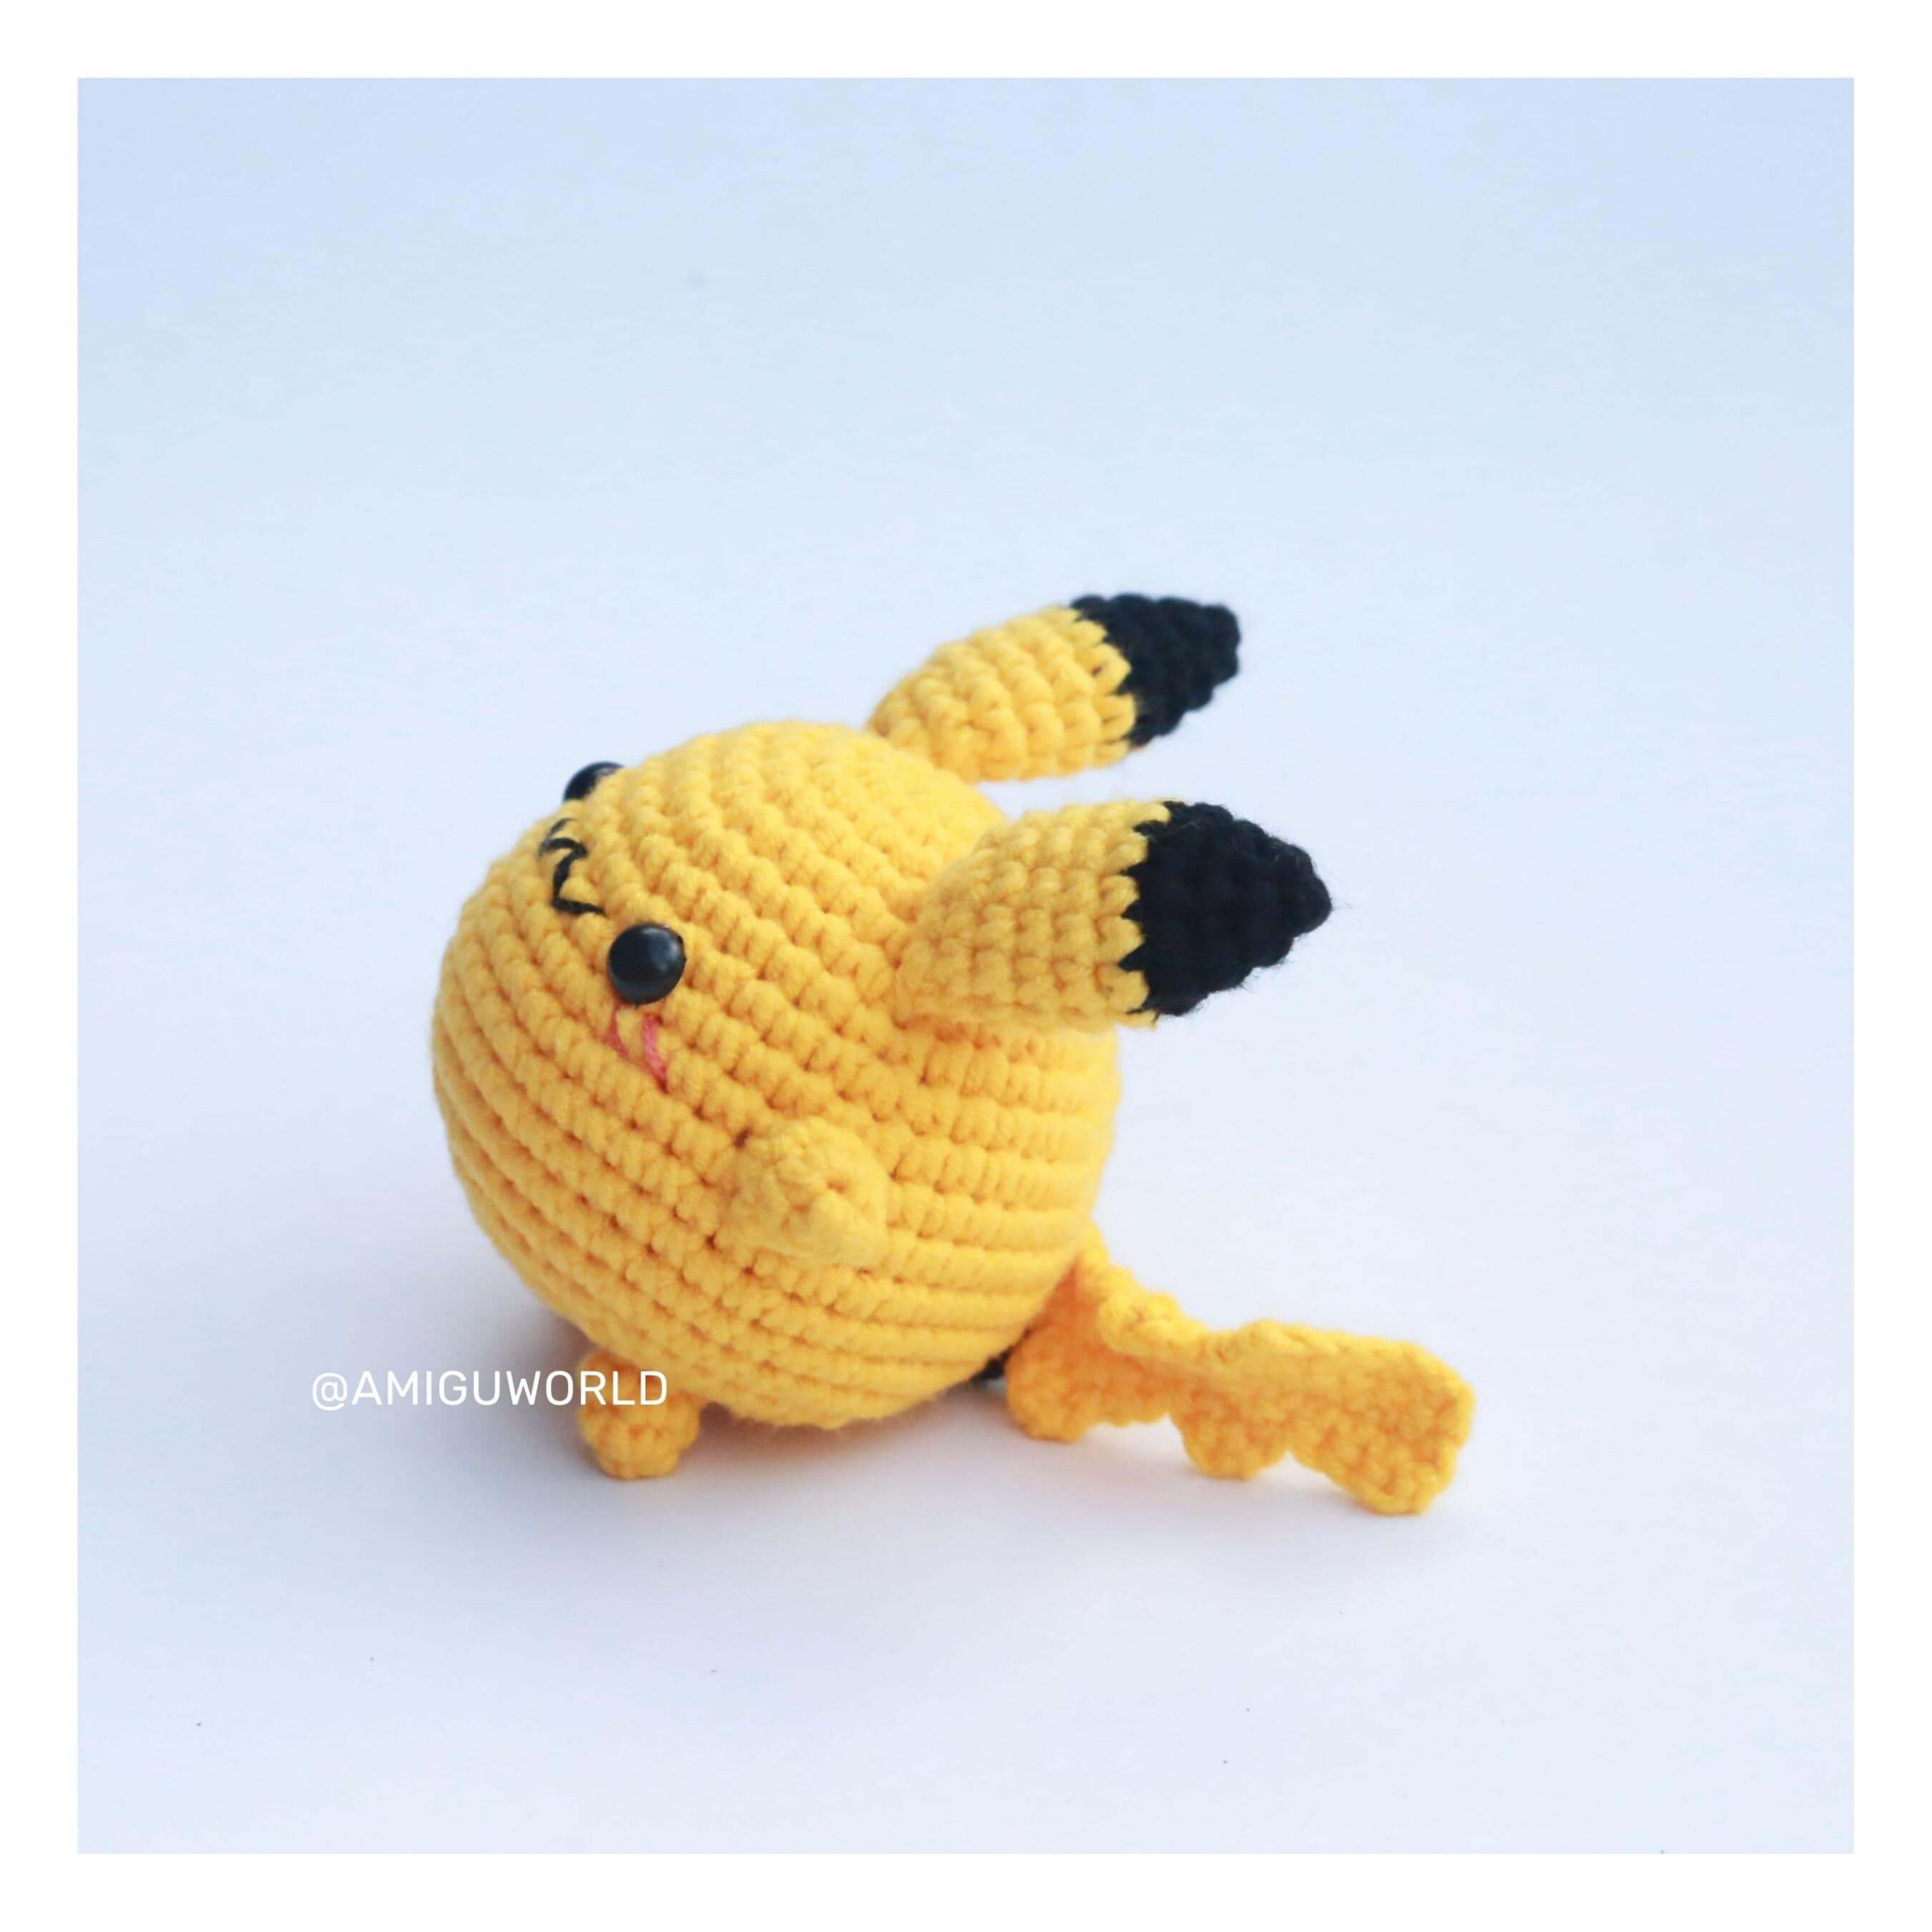 pikachu-amigurumi-crochet-pattern-by-amiguworld (5)